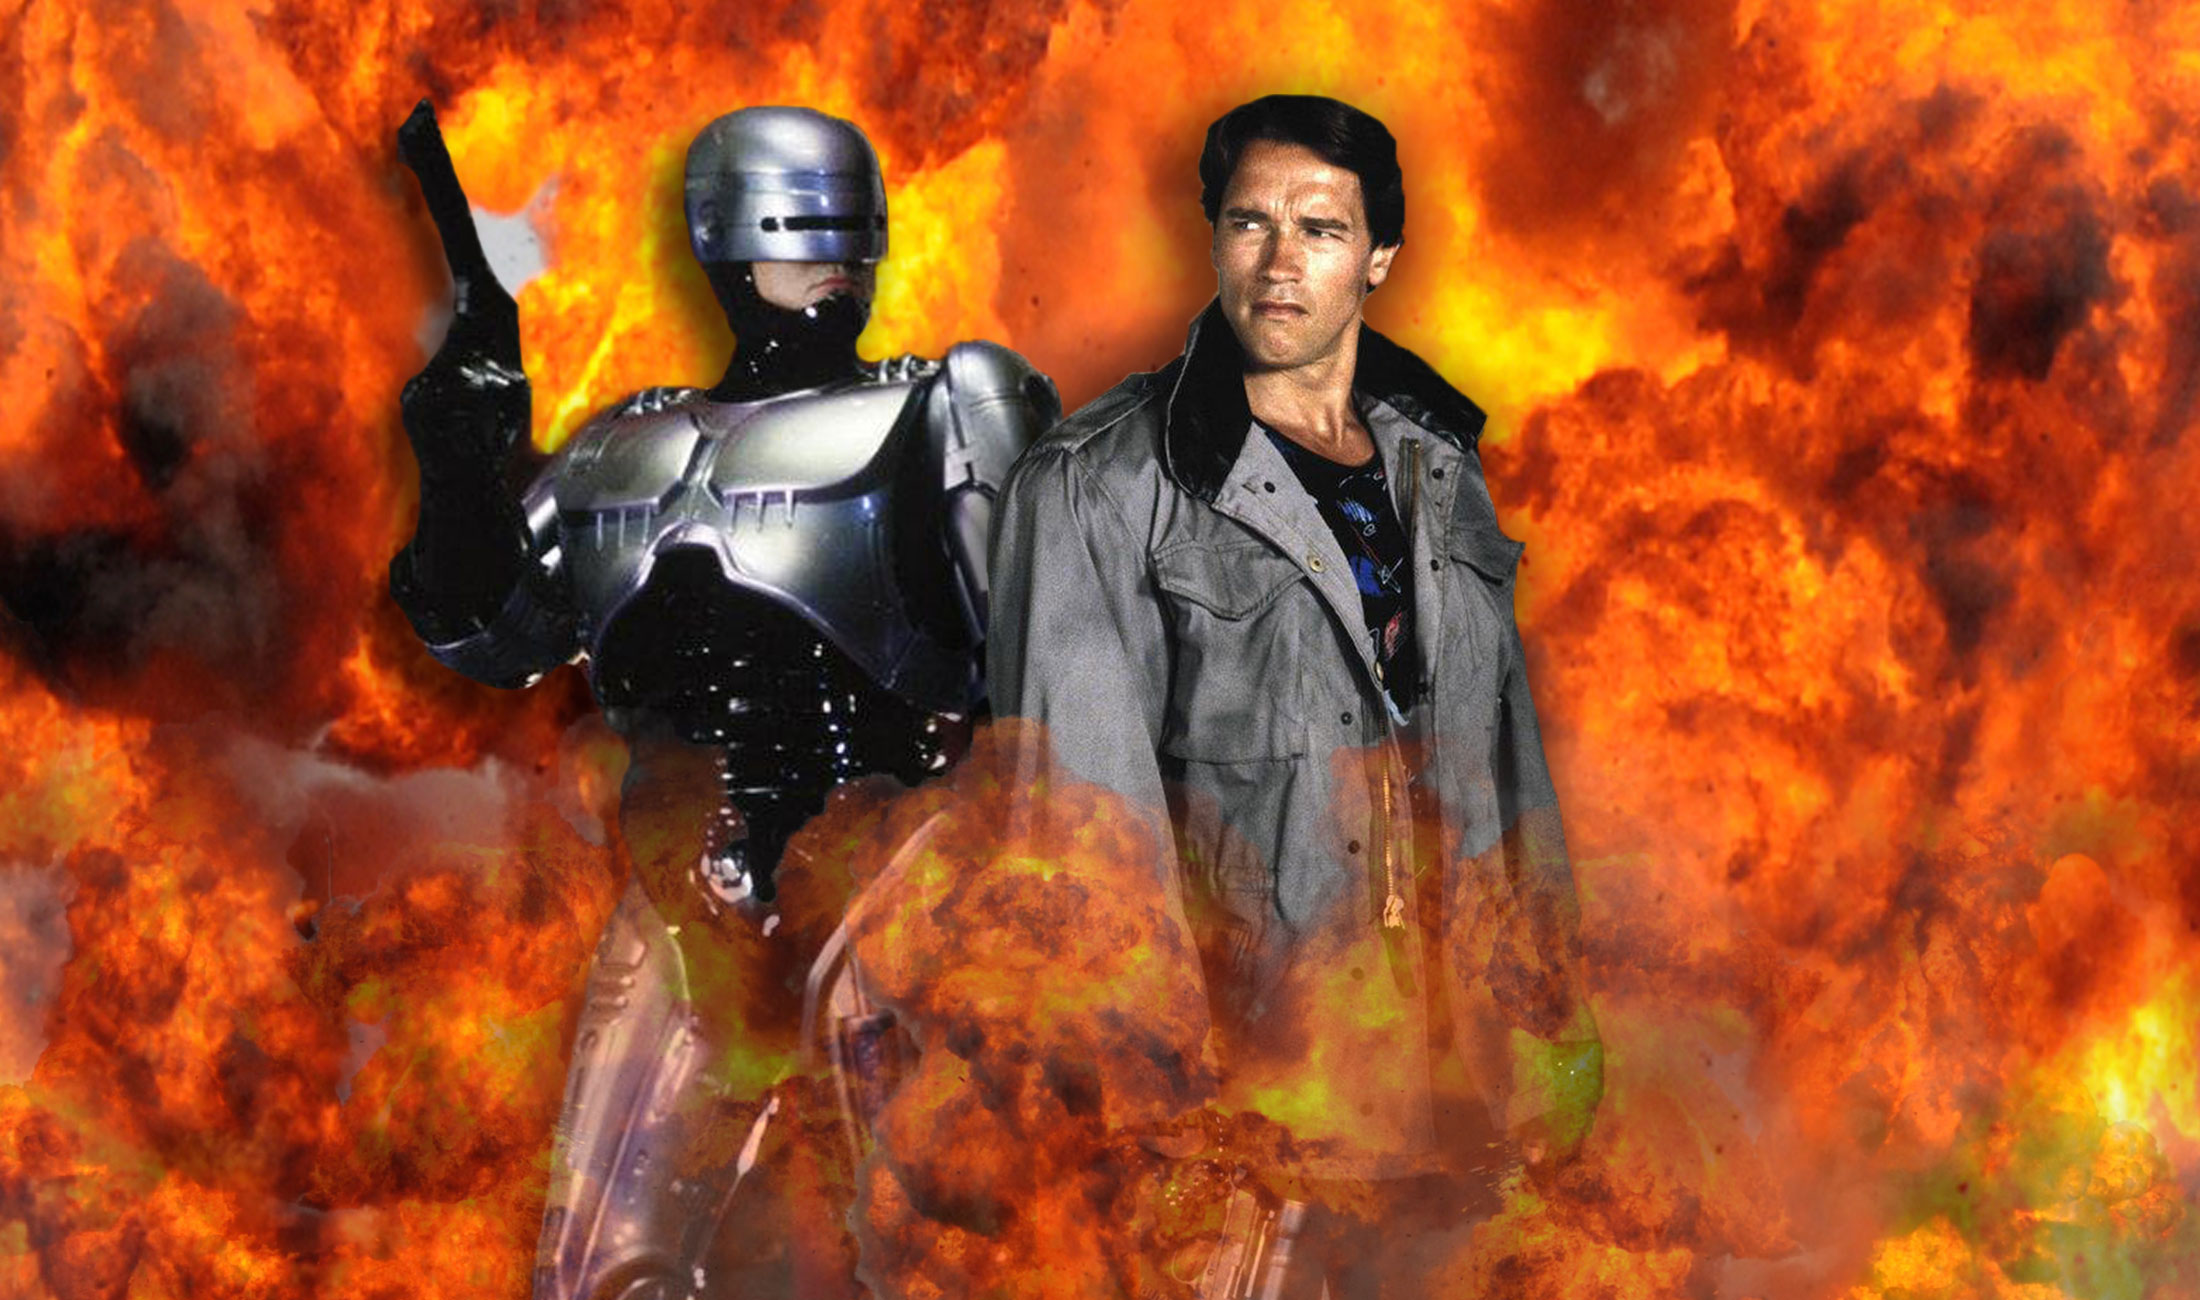 Robocop, Terminator, Alien, Predator timeline.